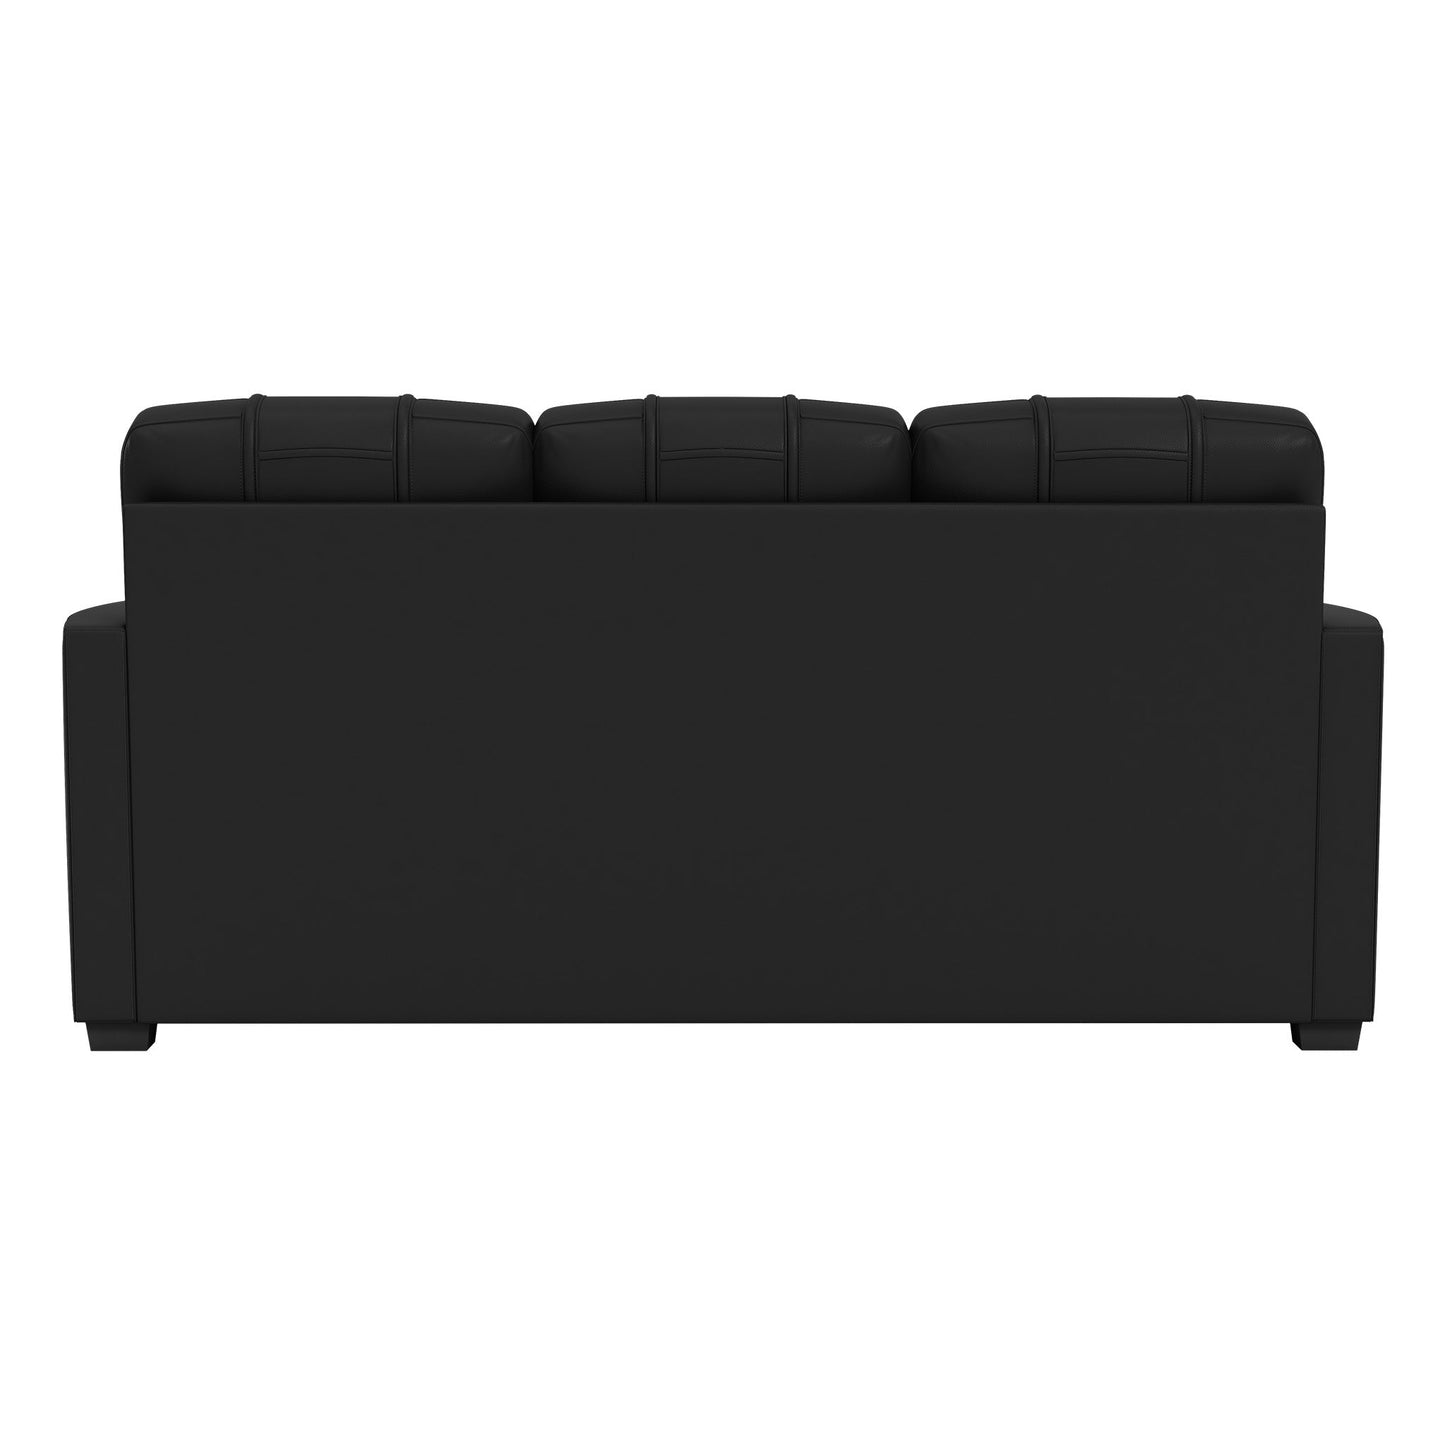 Silver Sofa with FC Dallas Wordmark Logo